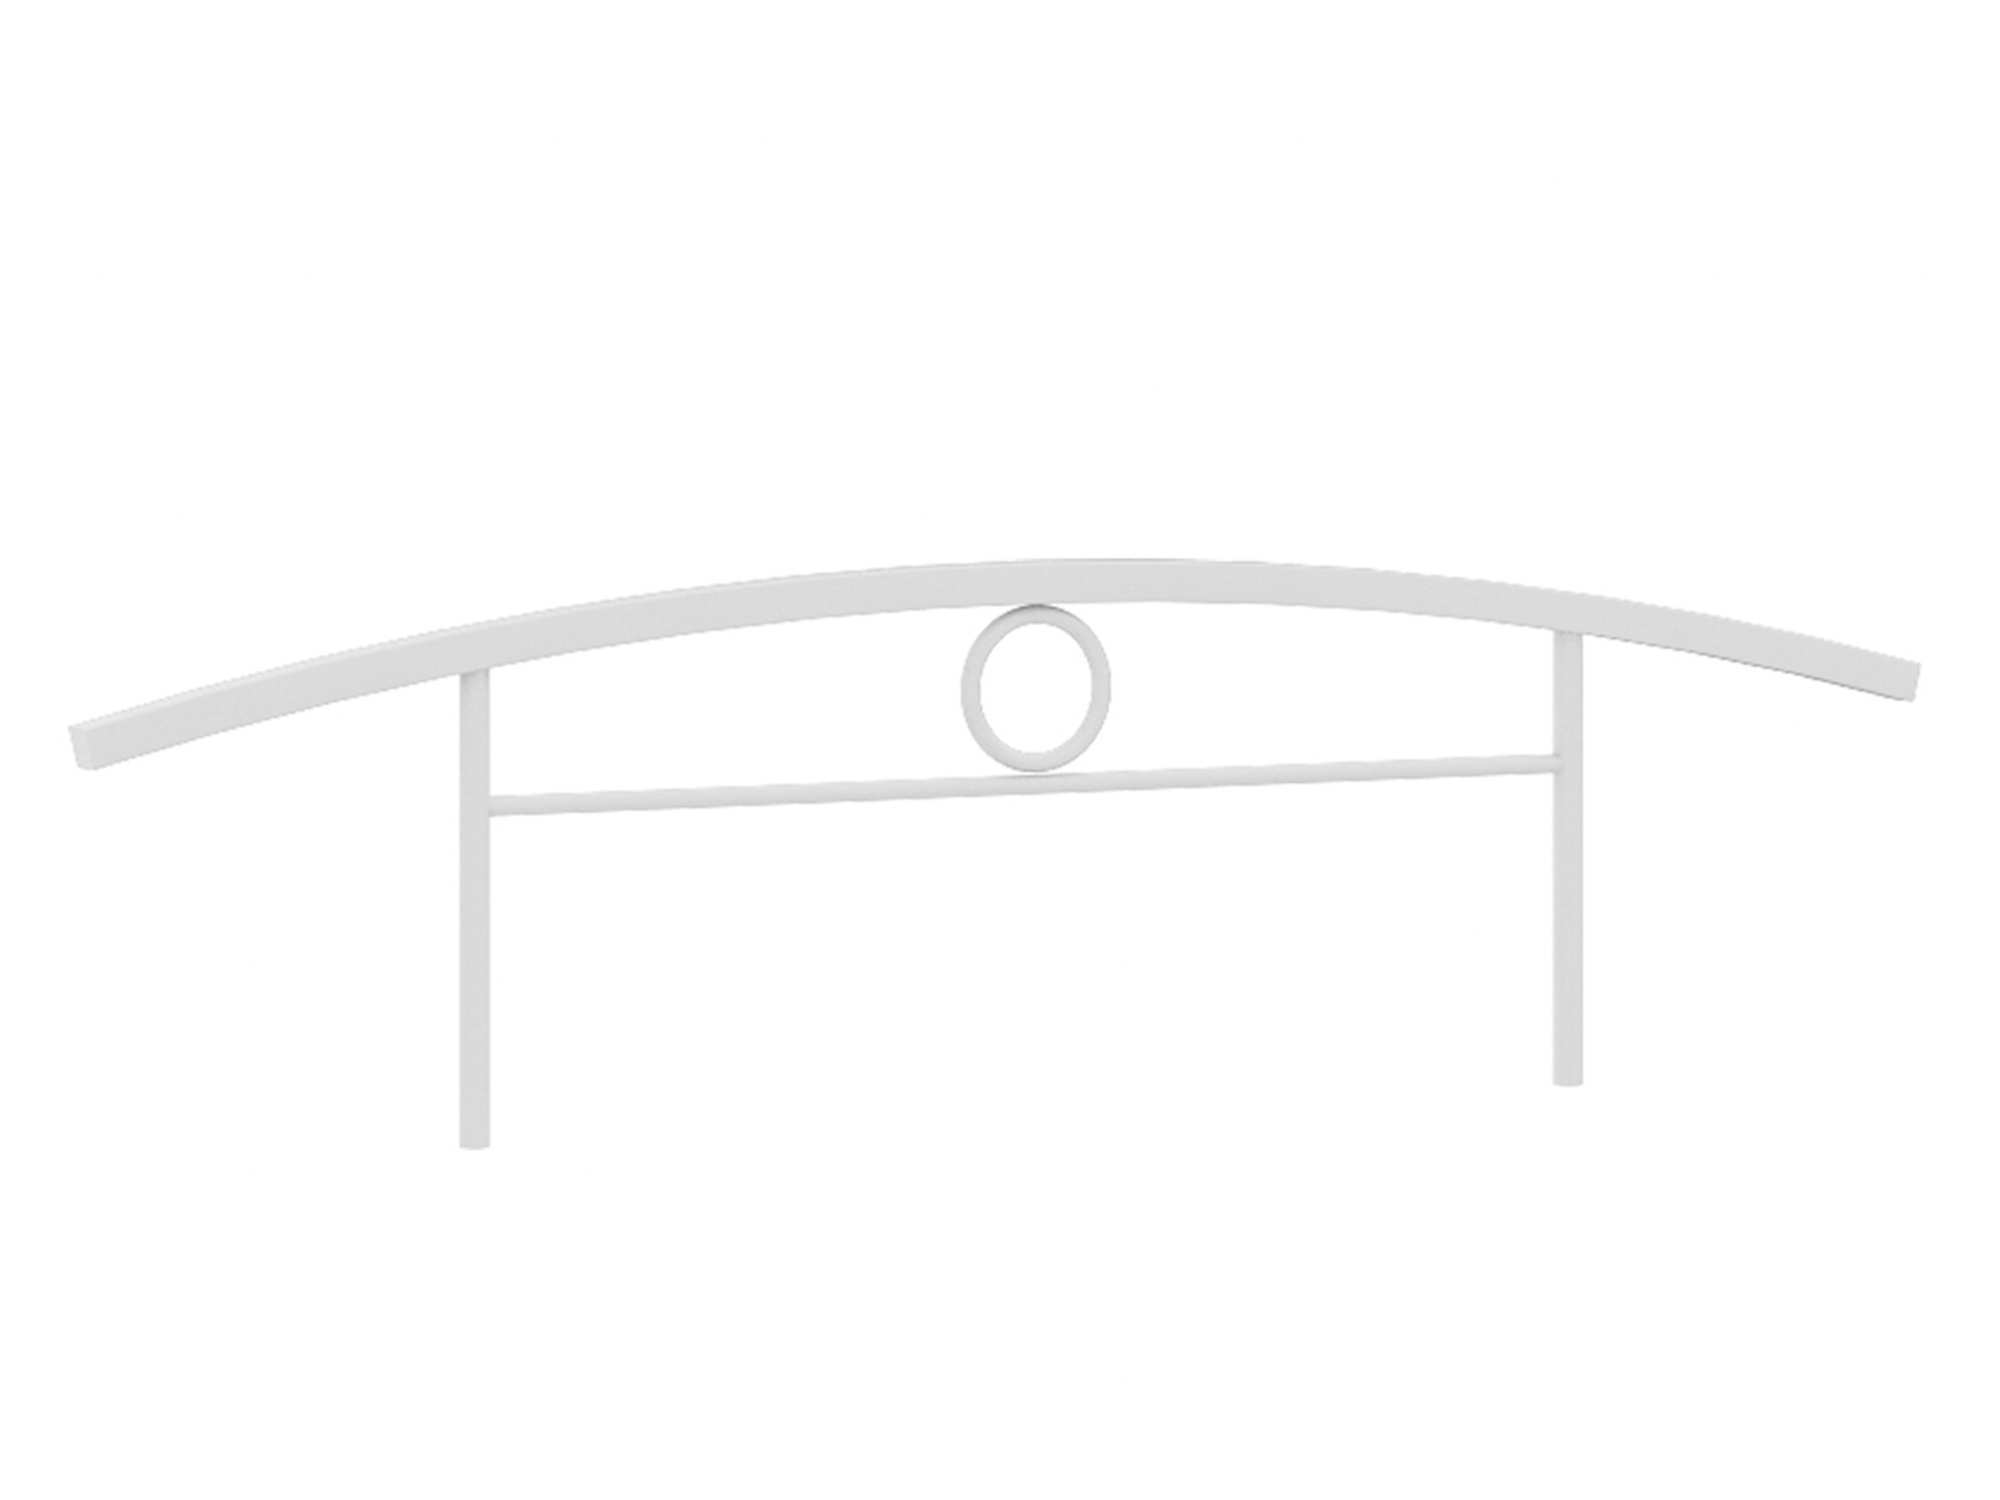 Ограничитель кровати Прованс Крем, Белый, Металл ограничитель для кровати универсальный single fold bedrail белый